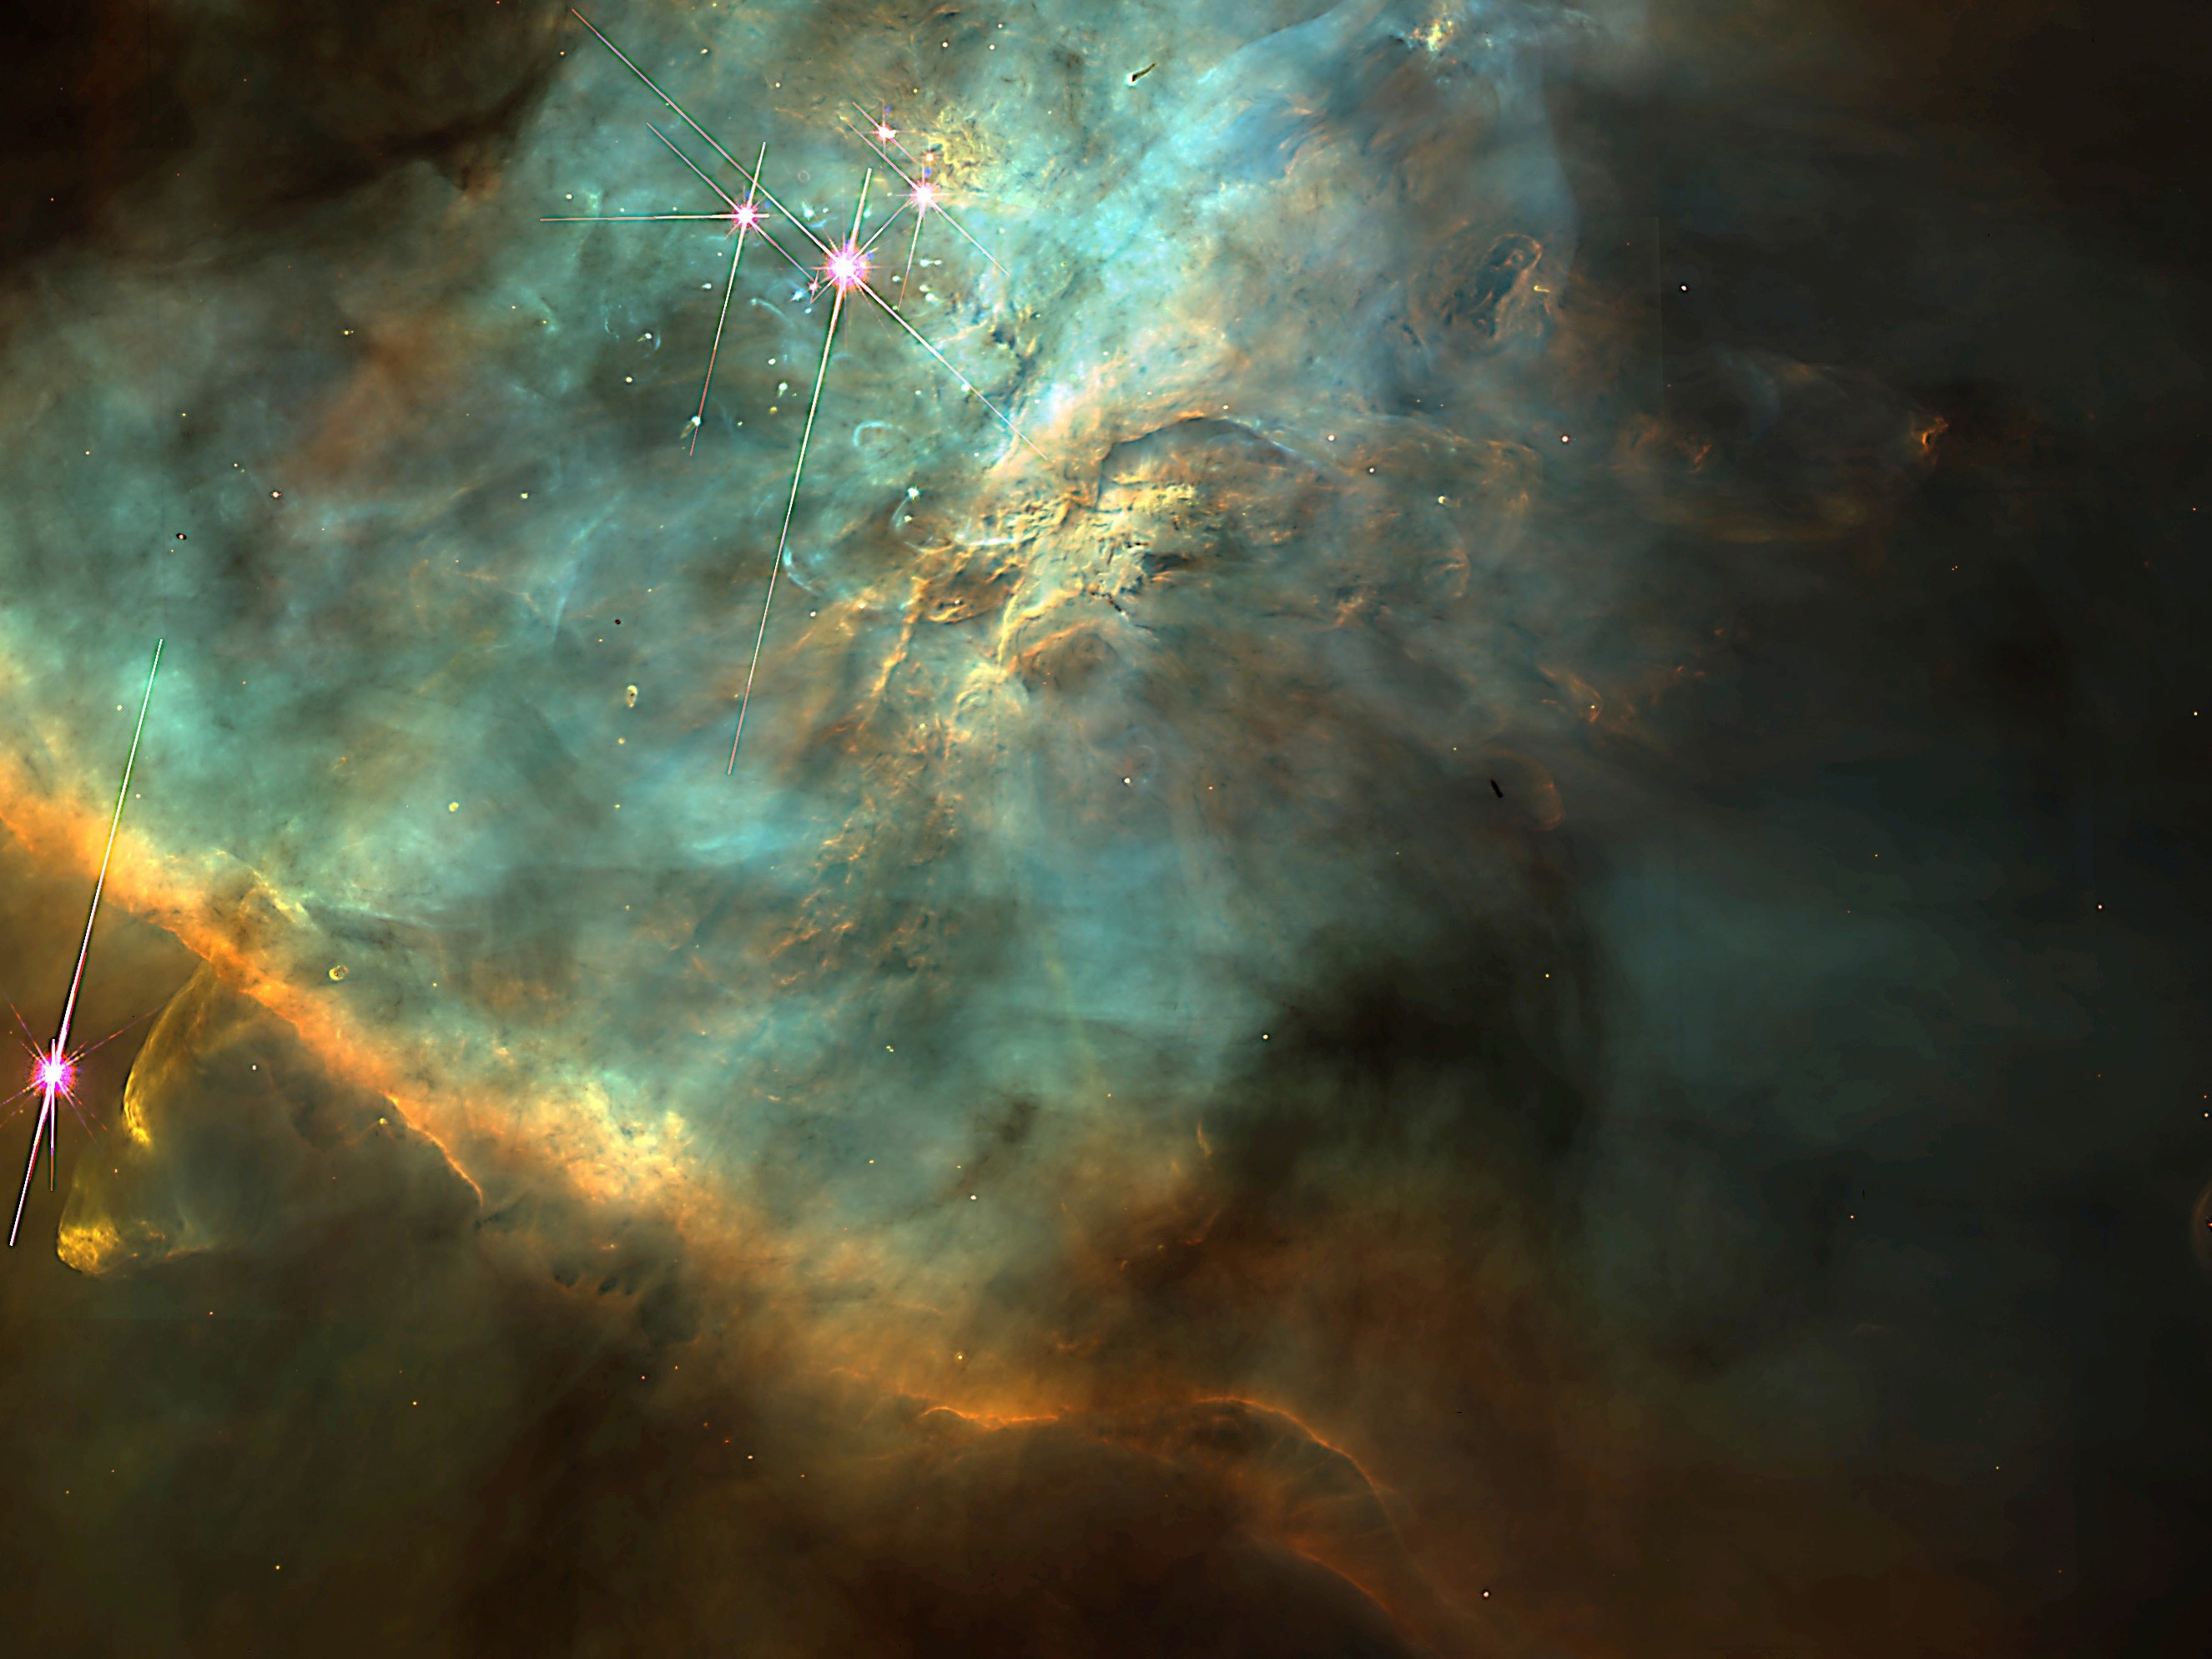 2651x1988 Full HD Wallpapers Orion Nebula HD 0.68 Mb - HD Wallpapers